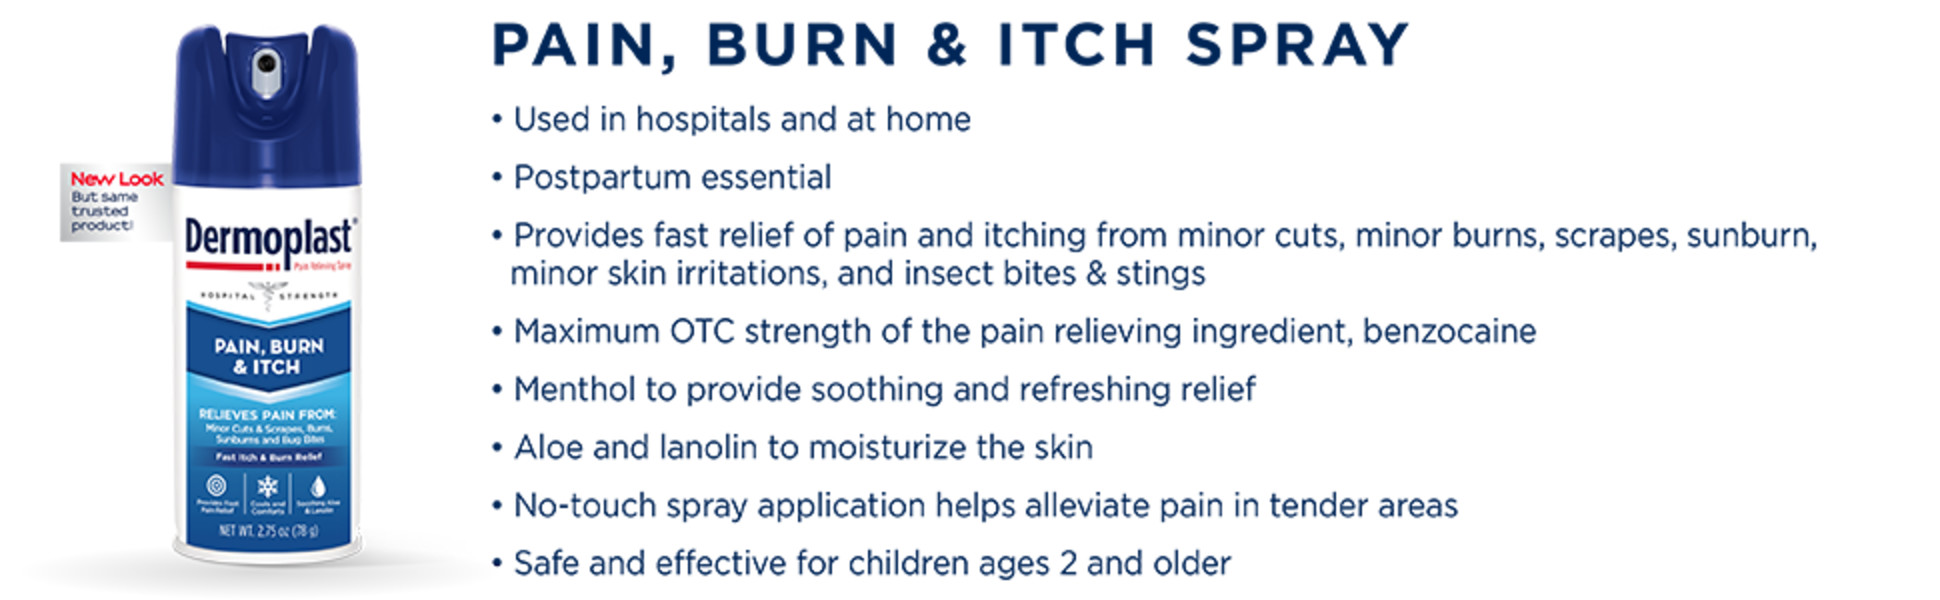 Dermoplast Pain Burn & Itch Relief Spray for Postpartum, Burns and Bug Bite  2.75